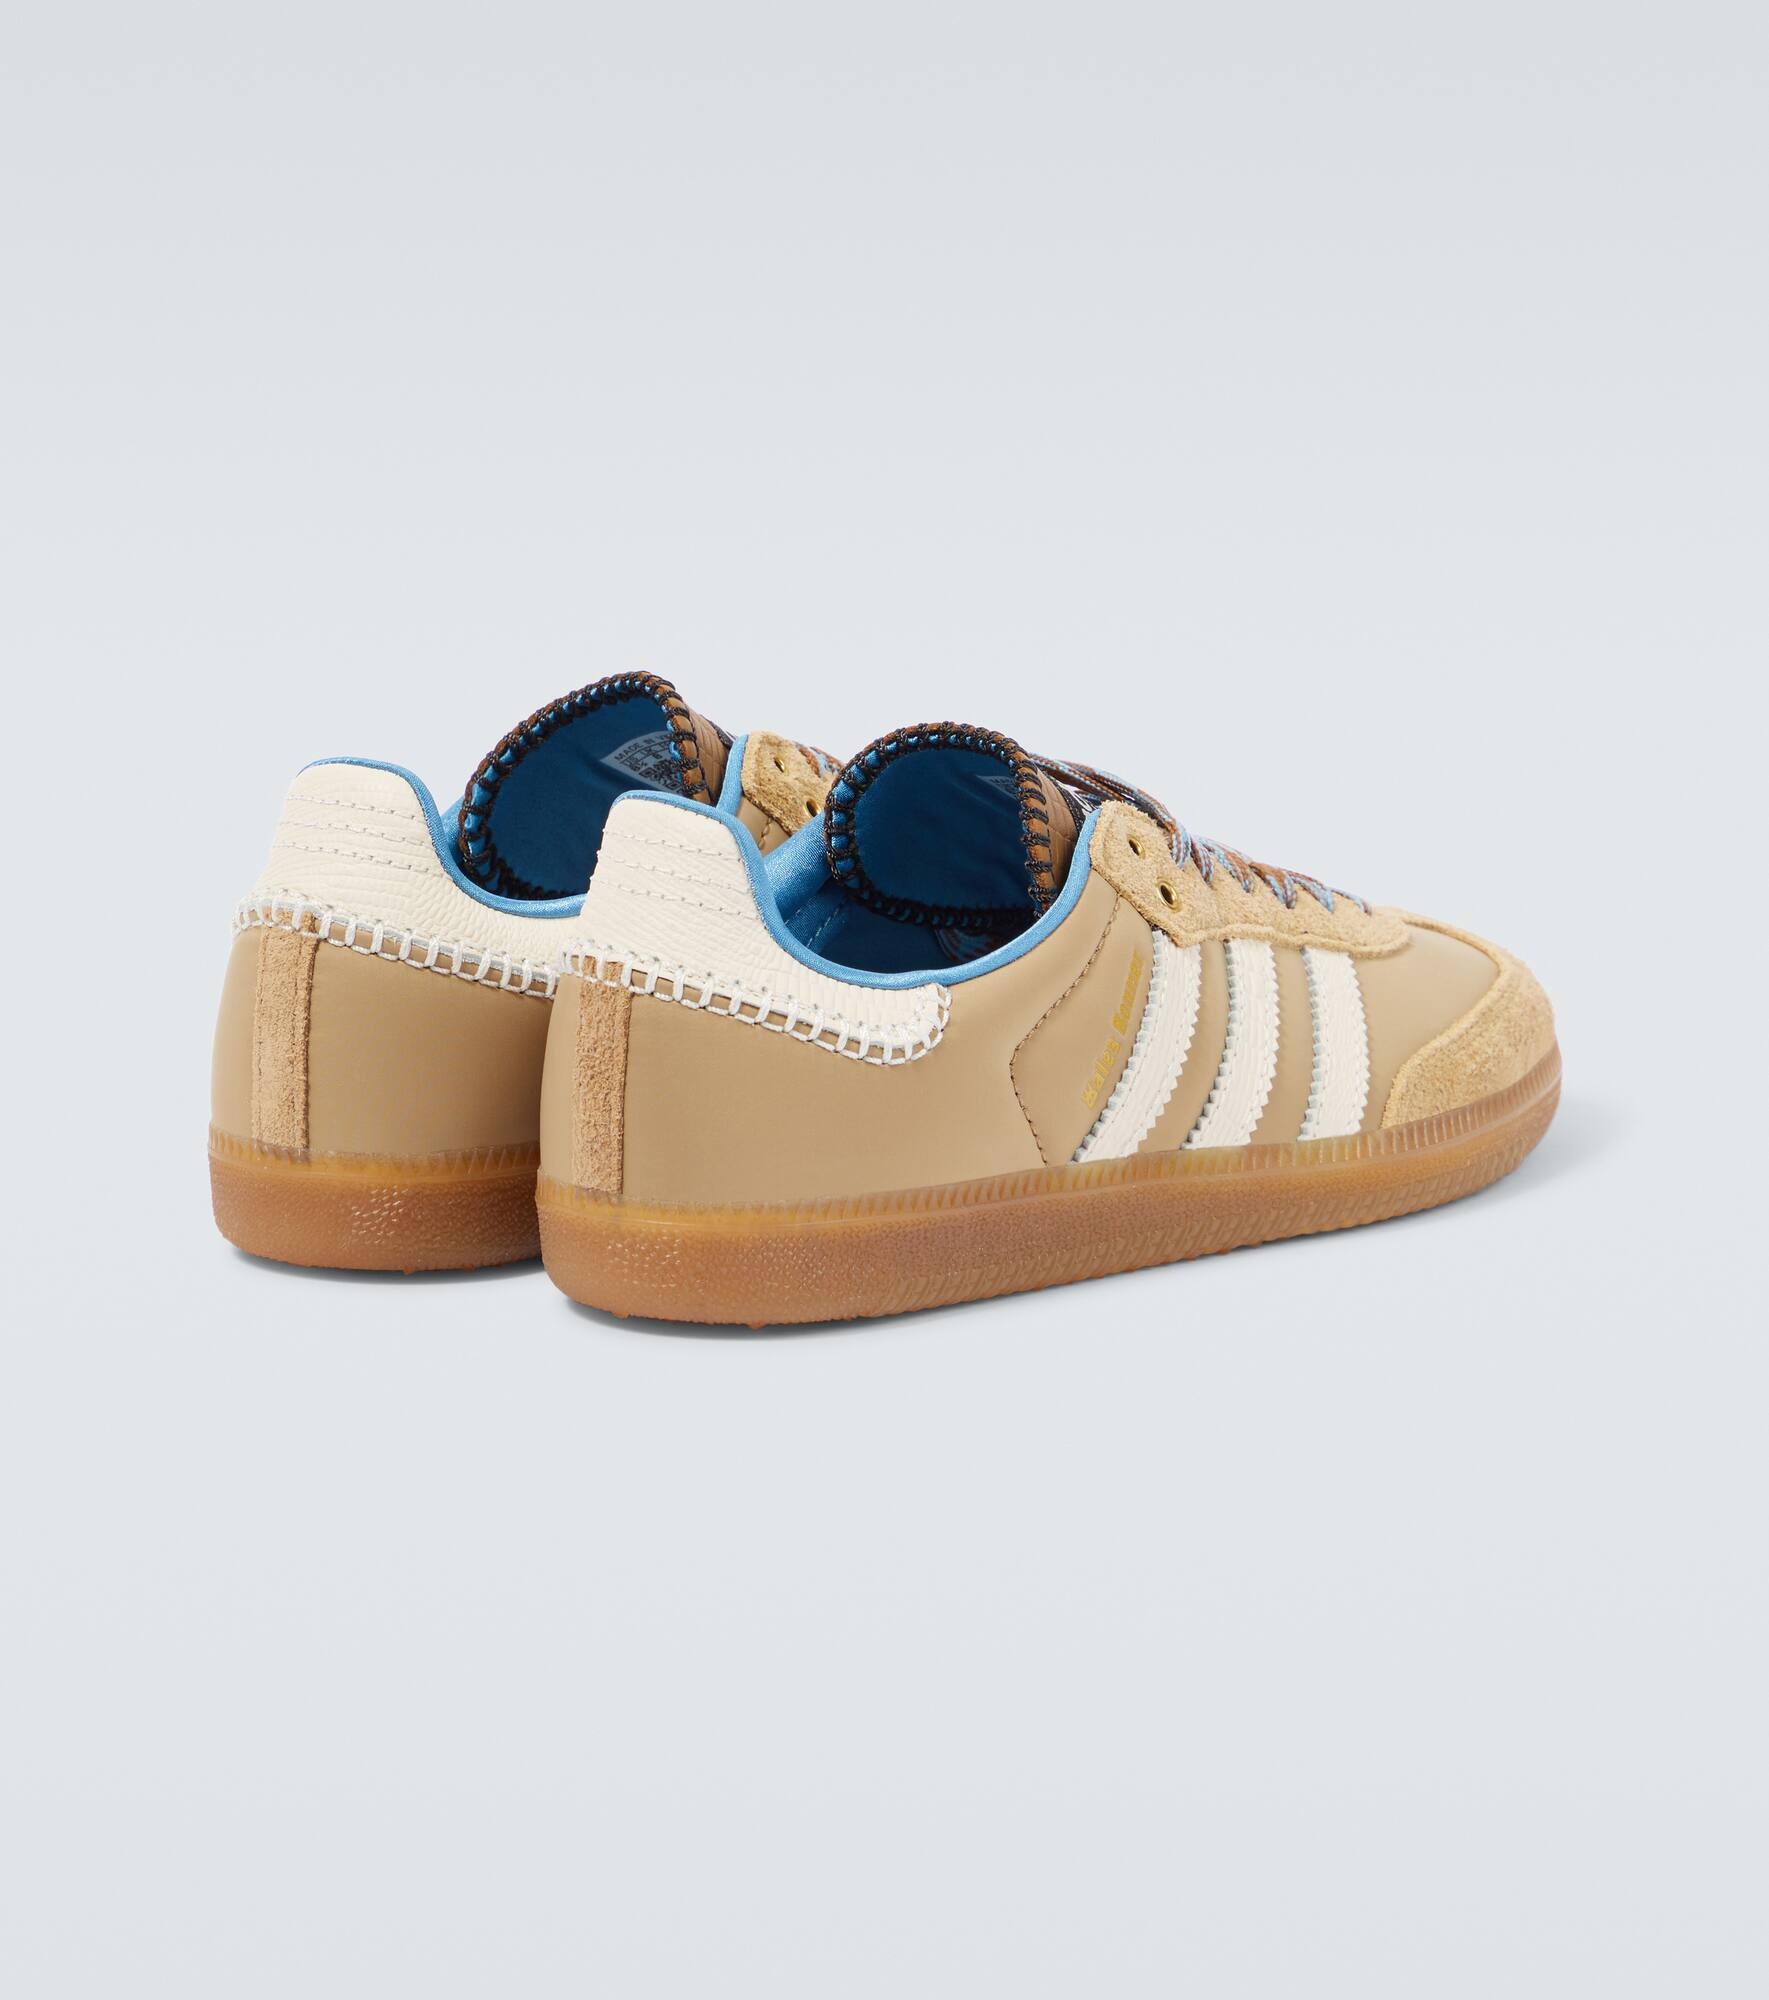 x Wales Bonner Samba leather sneakers - 5